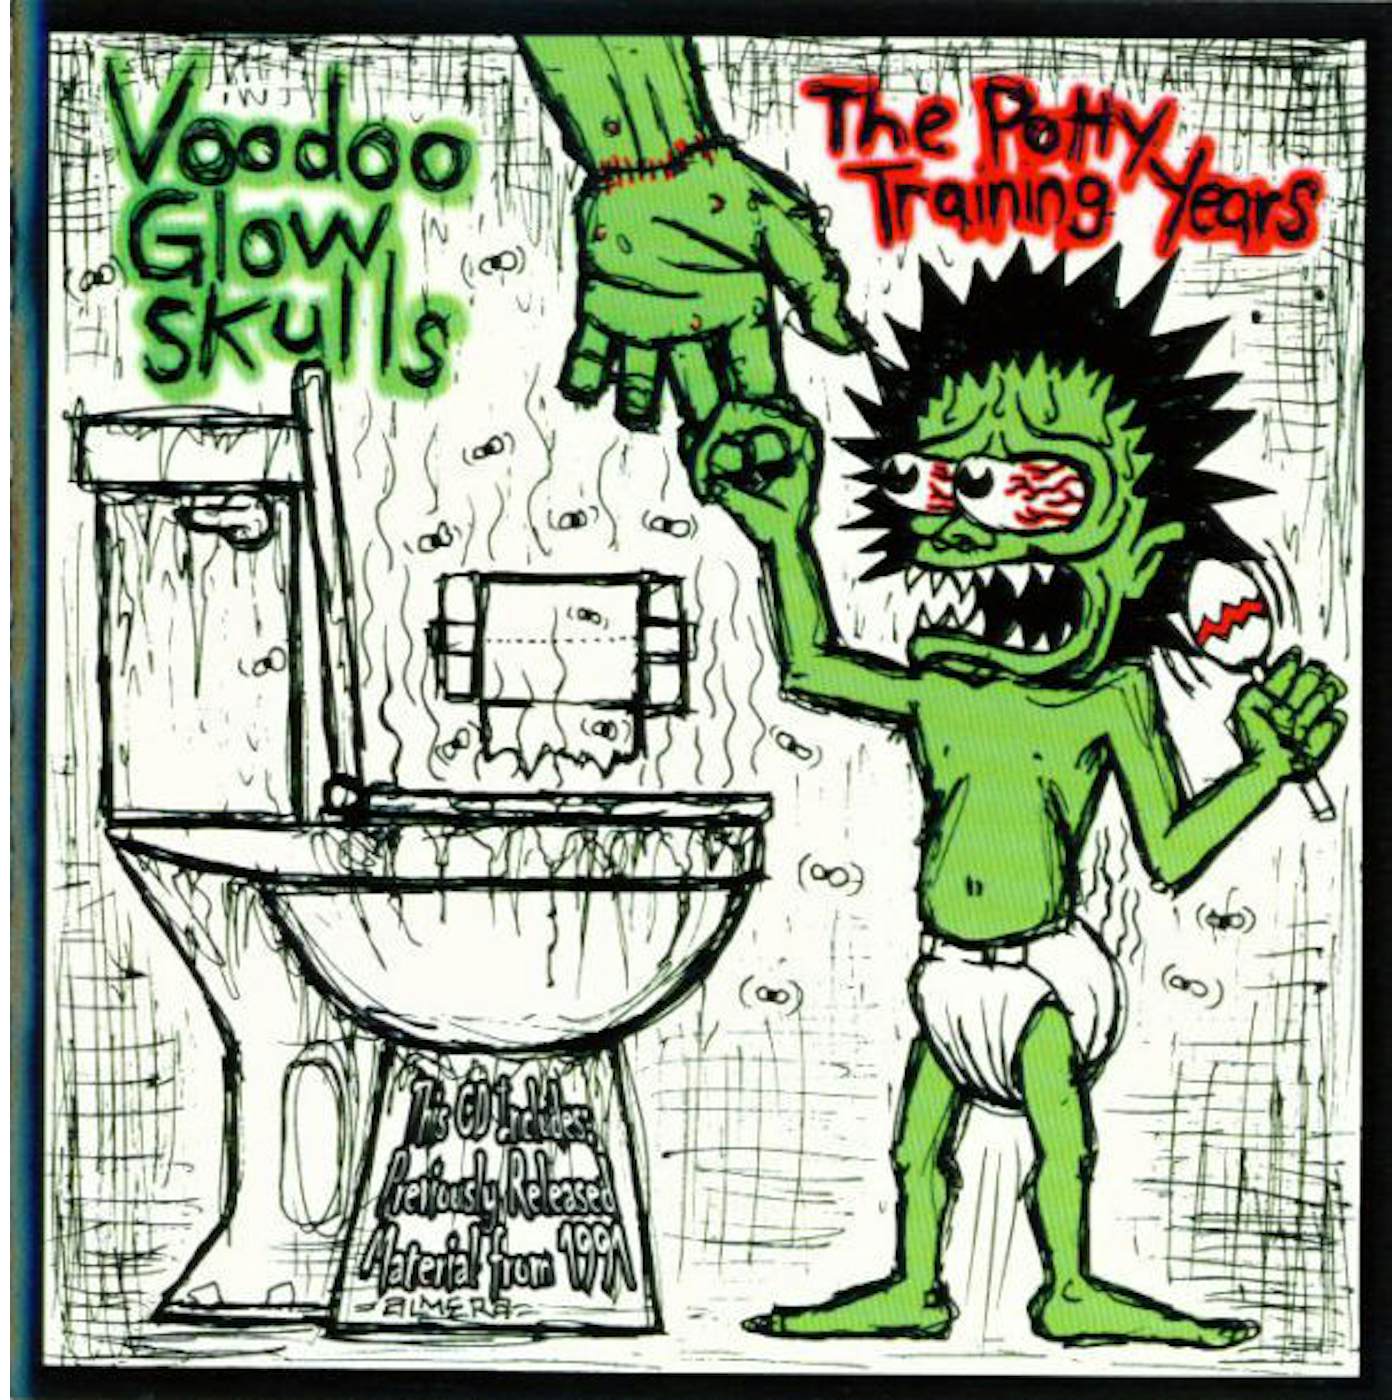 Voodoo Glow Skulls POTTY TRAINING YEARS Vinyl Record